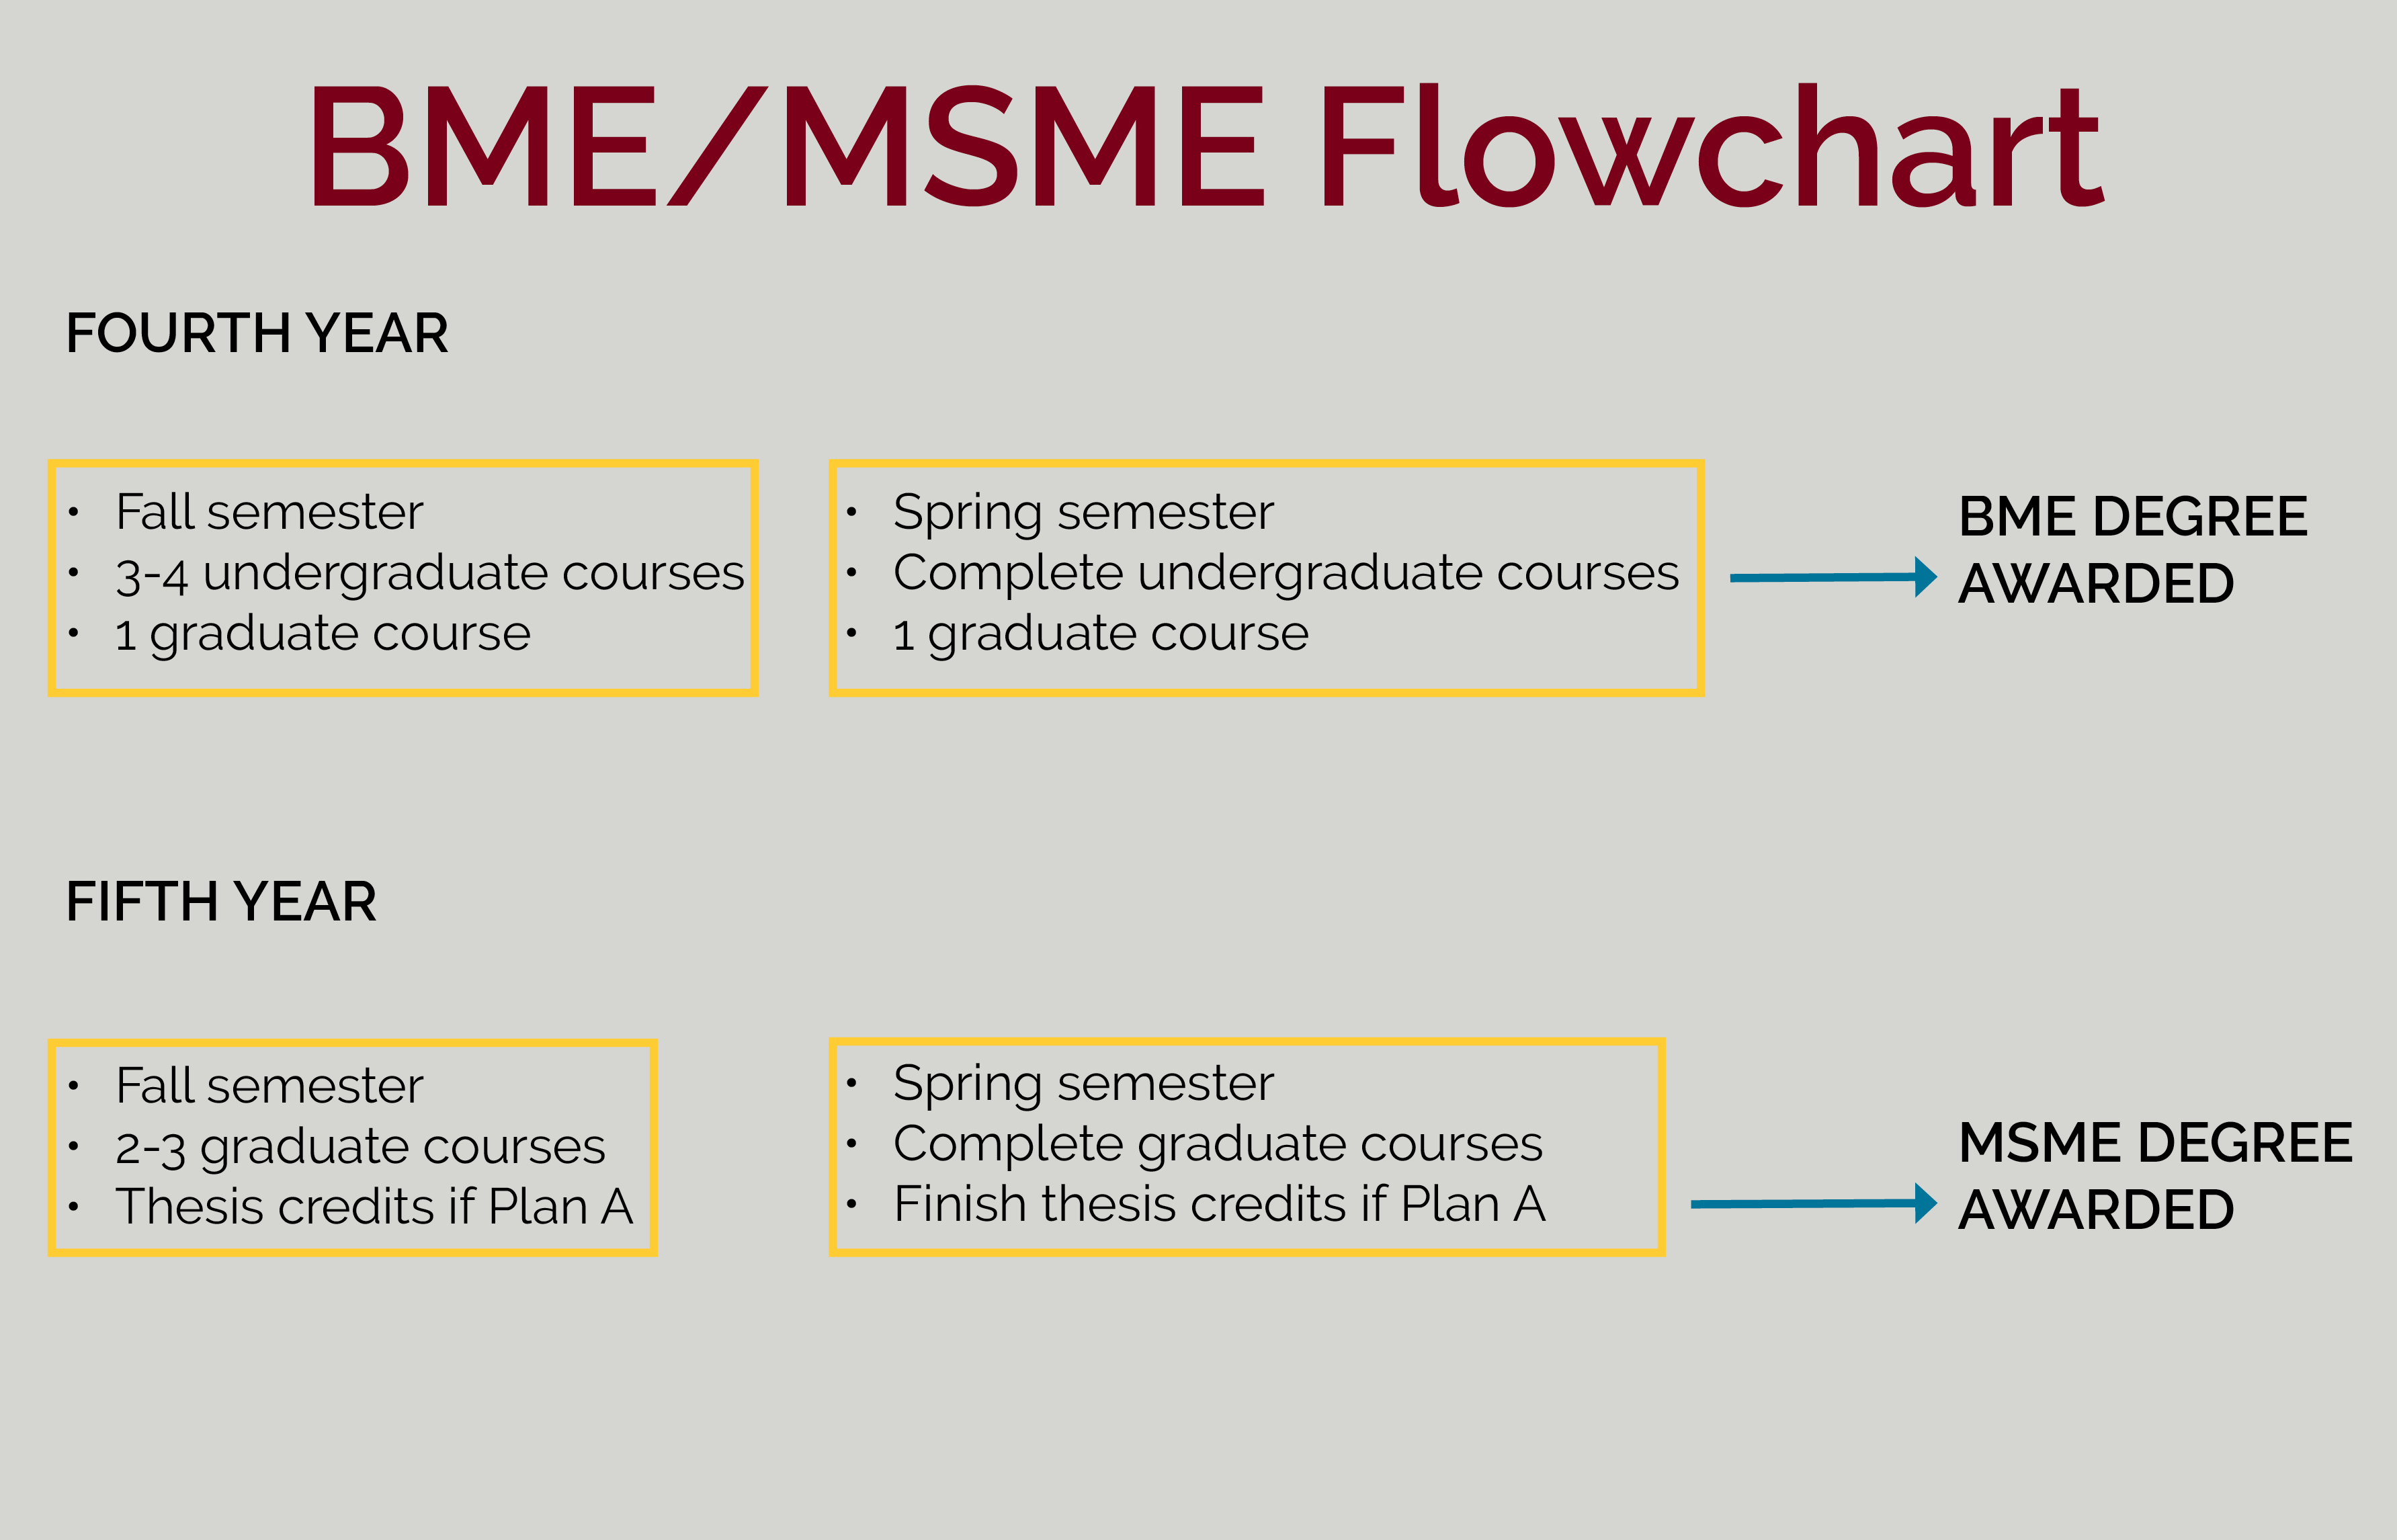 BME_MSME Flowchart